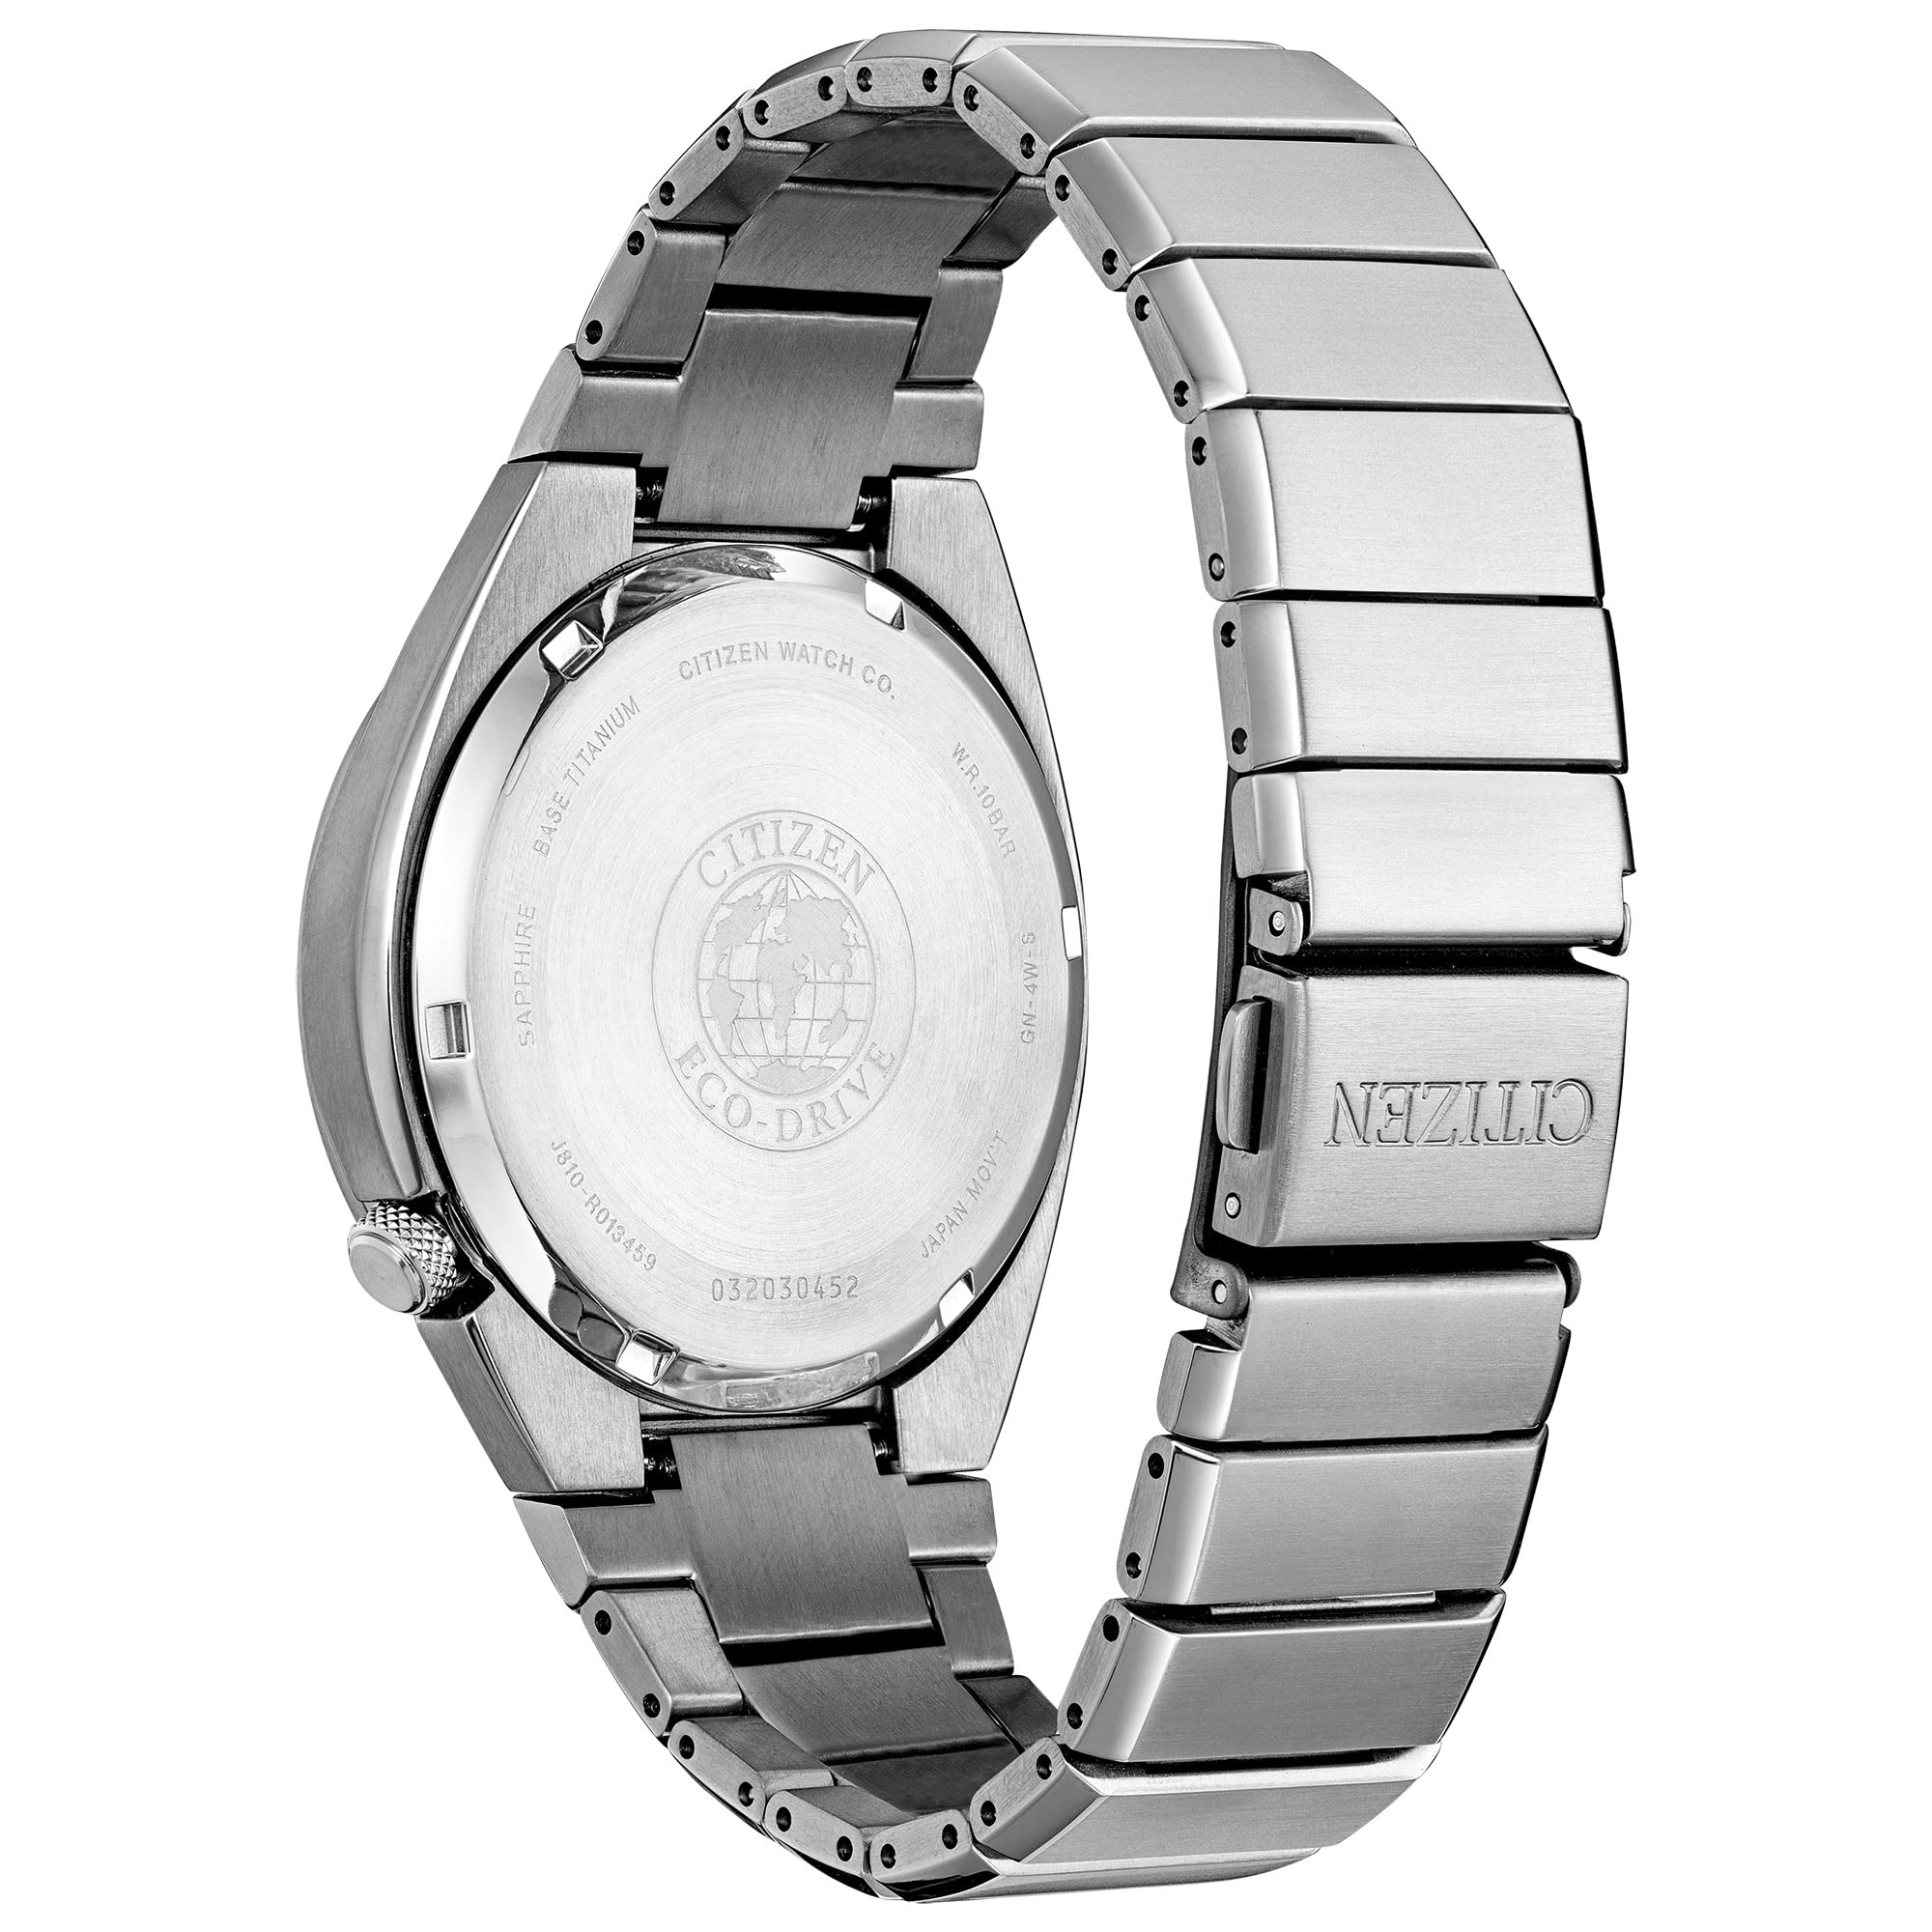 Citizen Men's Eco-Drive Sport Luxury Armor Watch in Super Titanium, Black Dial (Model: AW1660-51H)